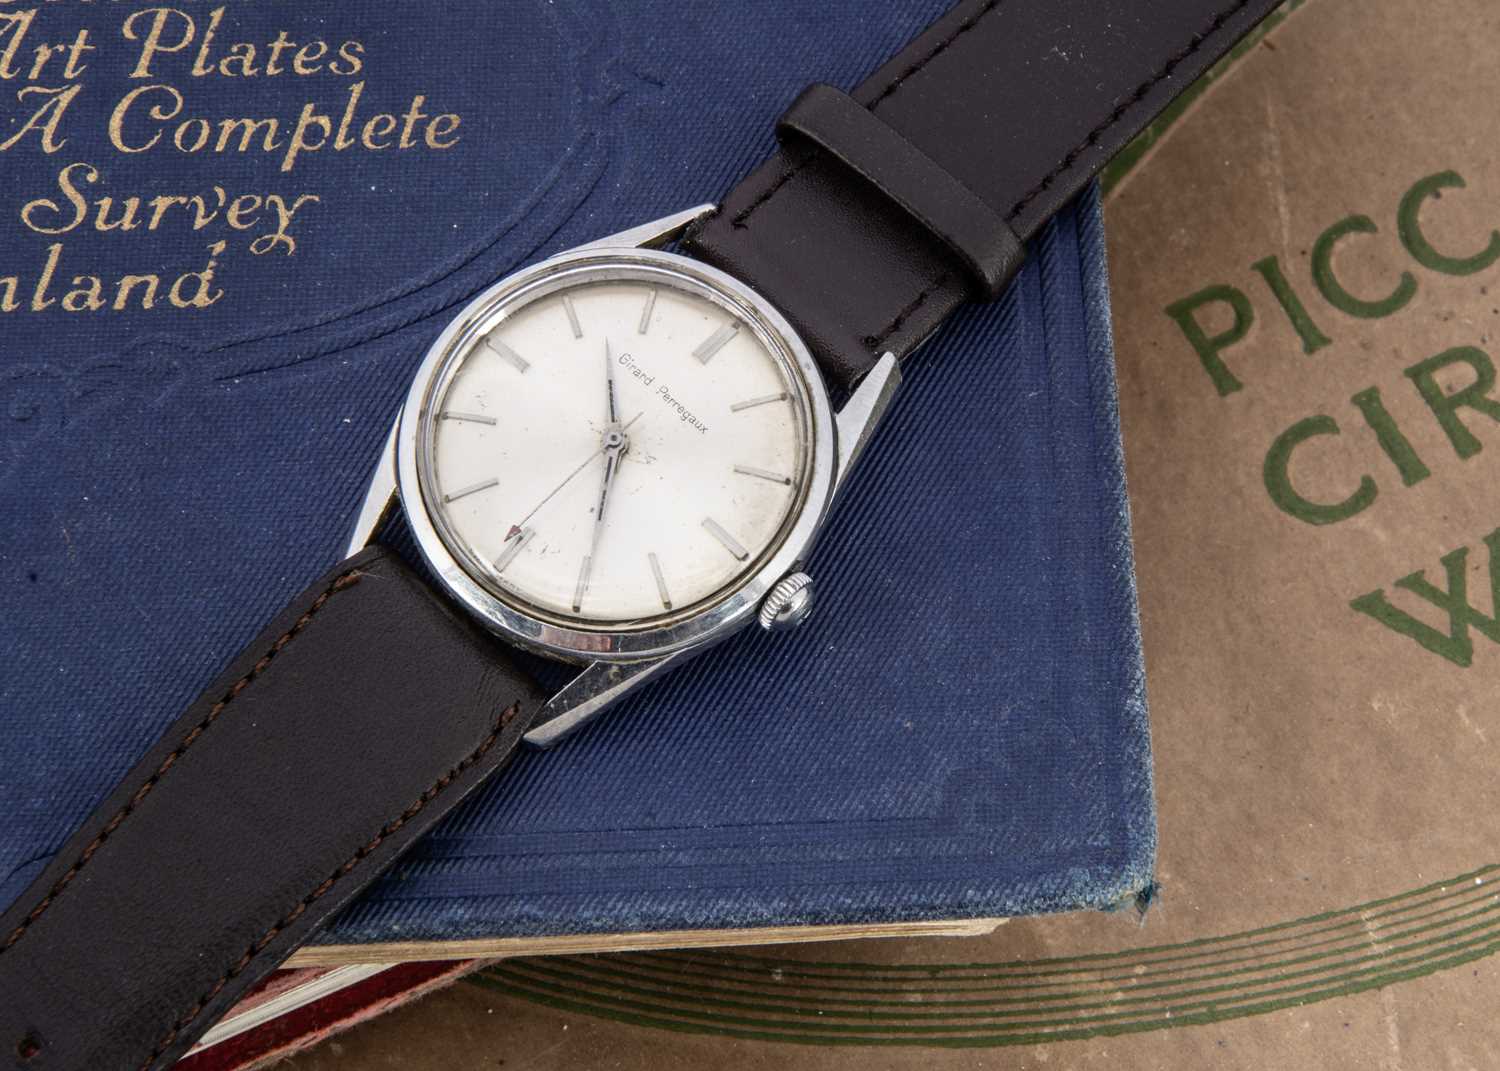 A circa 1970's Girard-Perregaux manual wind stainless steel wristwatch,